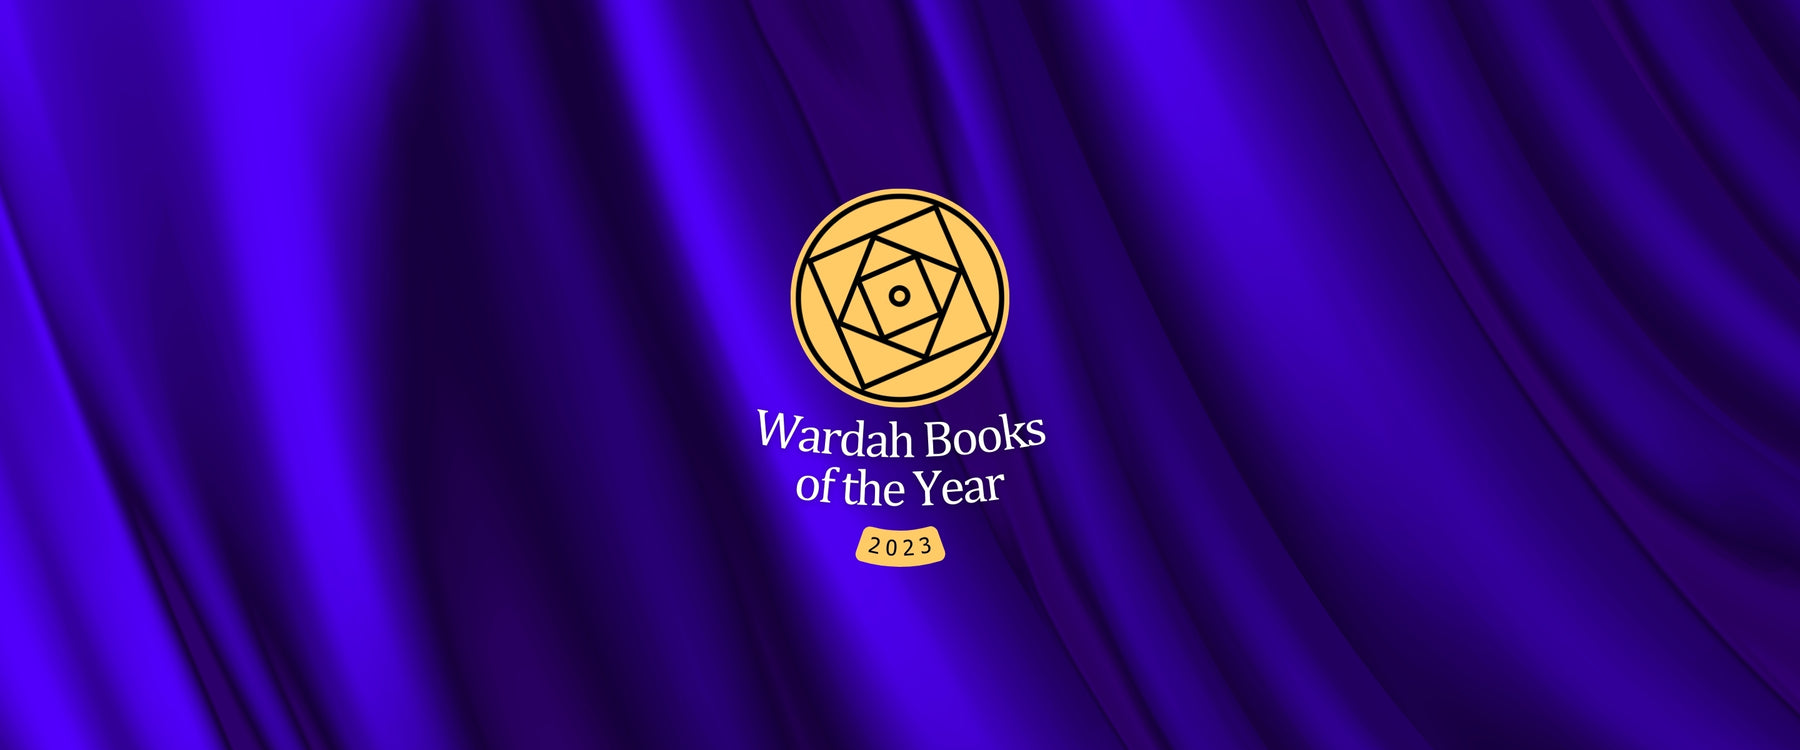 Wardah Books of the Year 2023